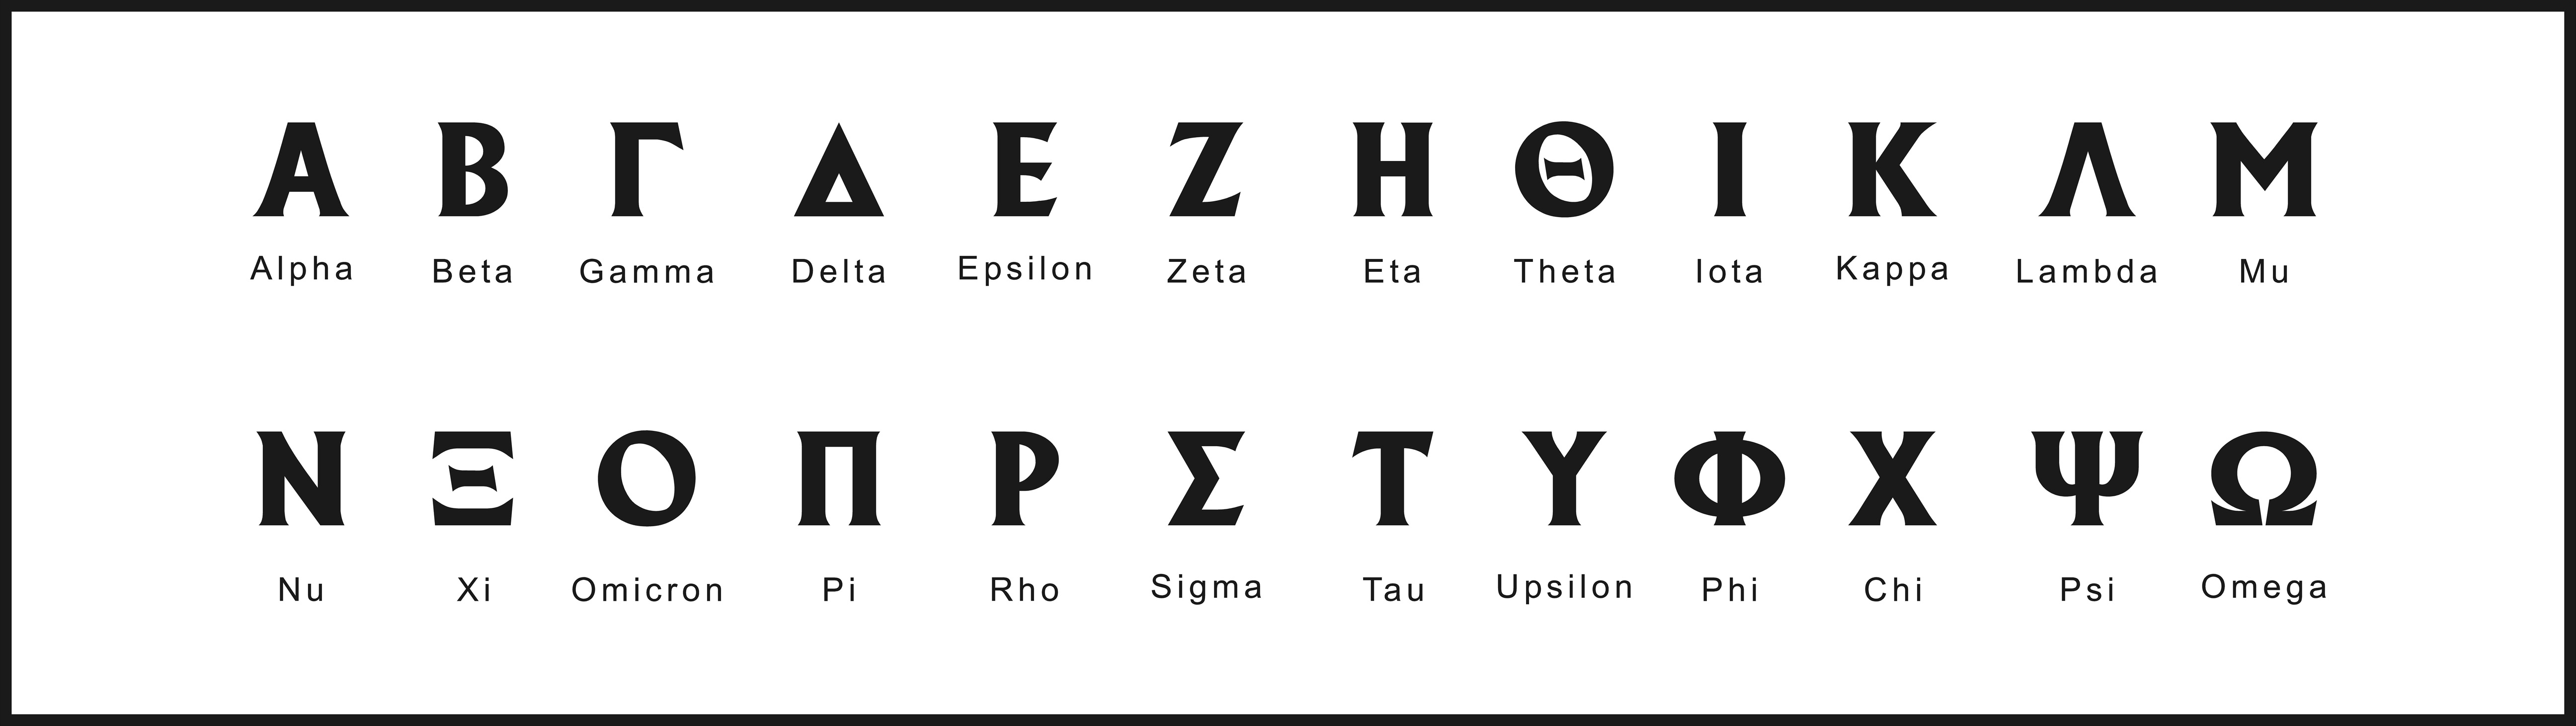 greek alphabet image v5 resize1